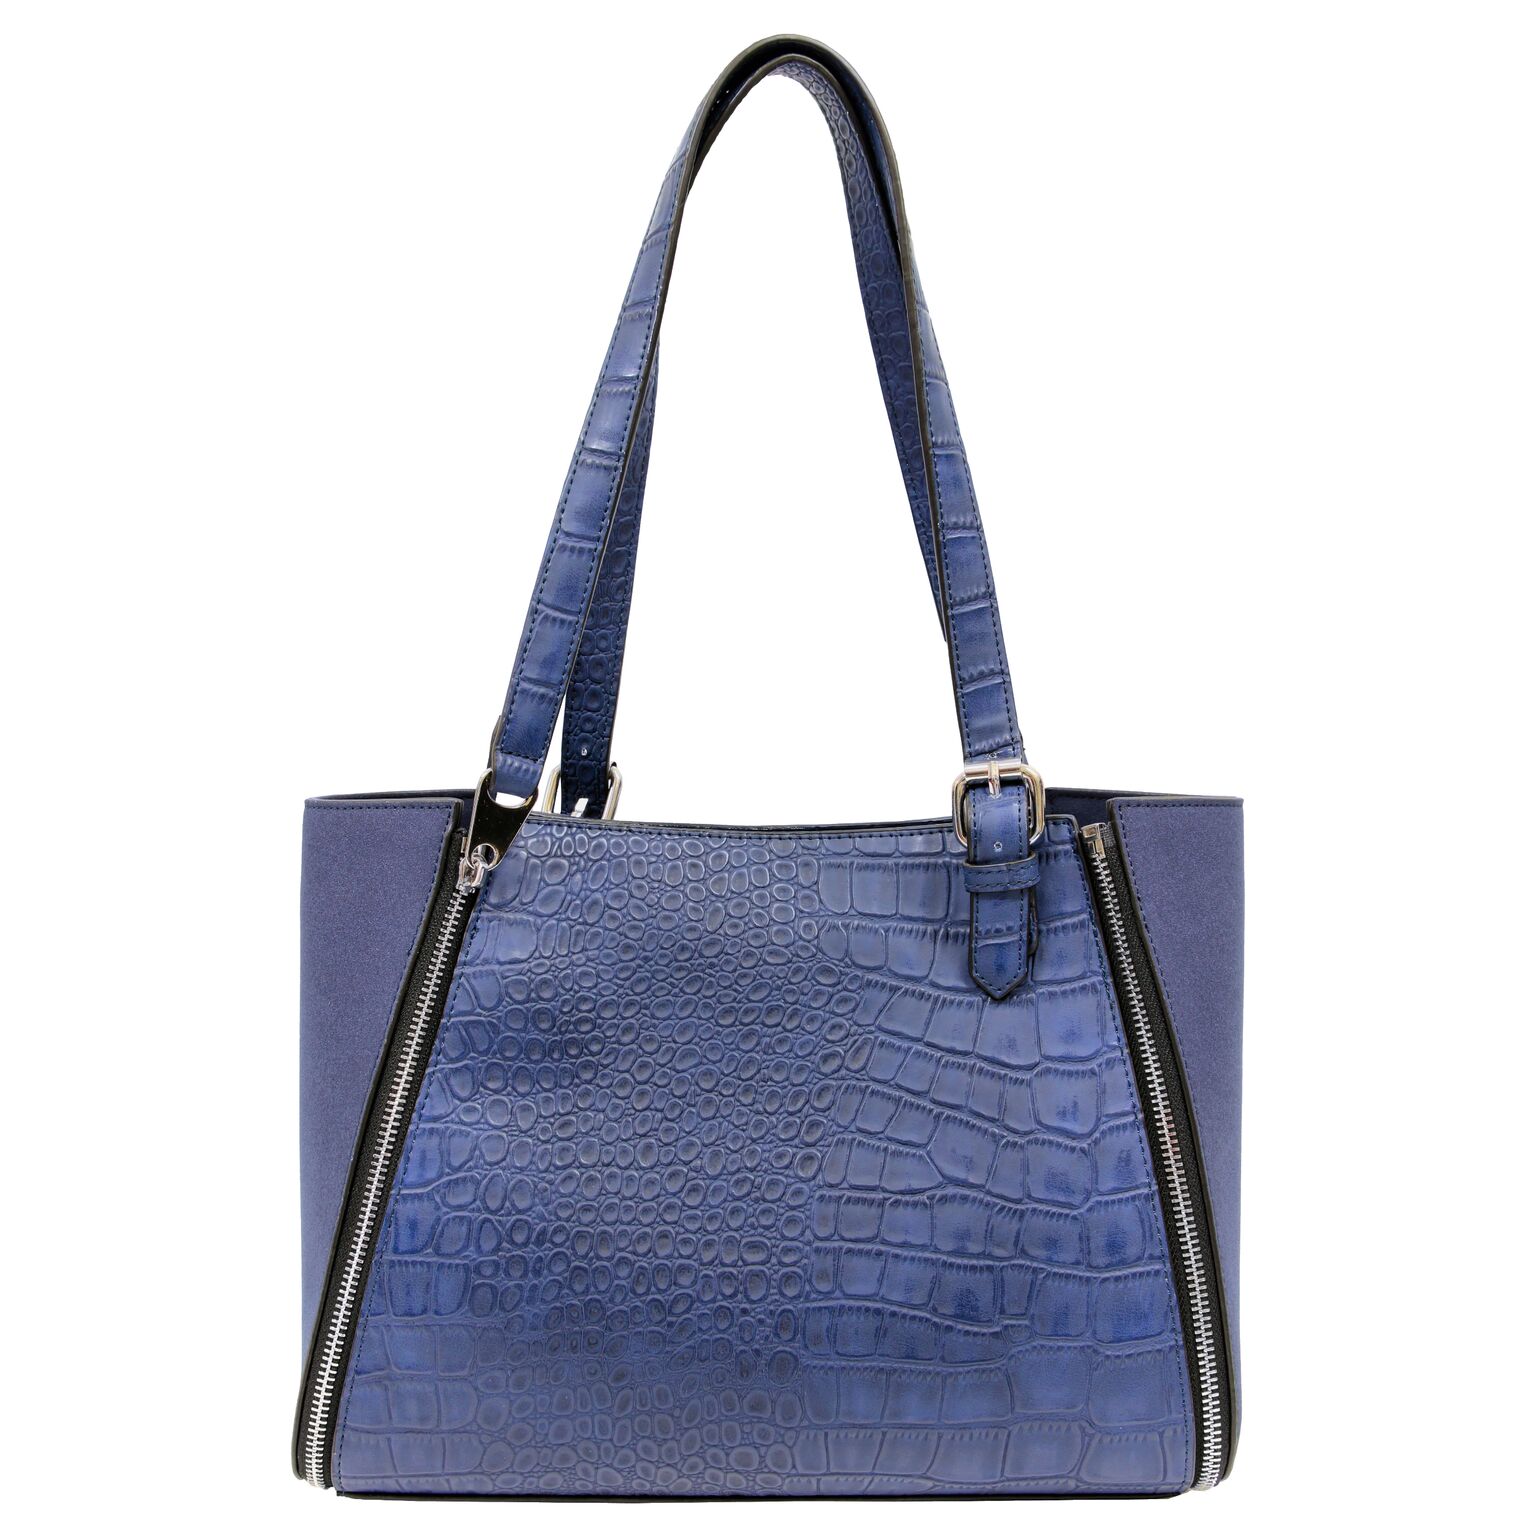 Florence Handbag | Artificial Leather | Wallets | Belts | Online | Afterpay